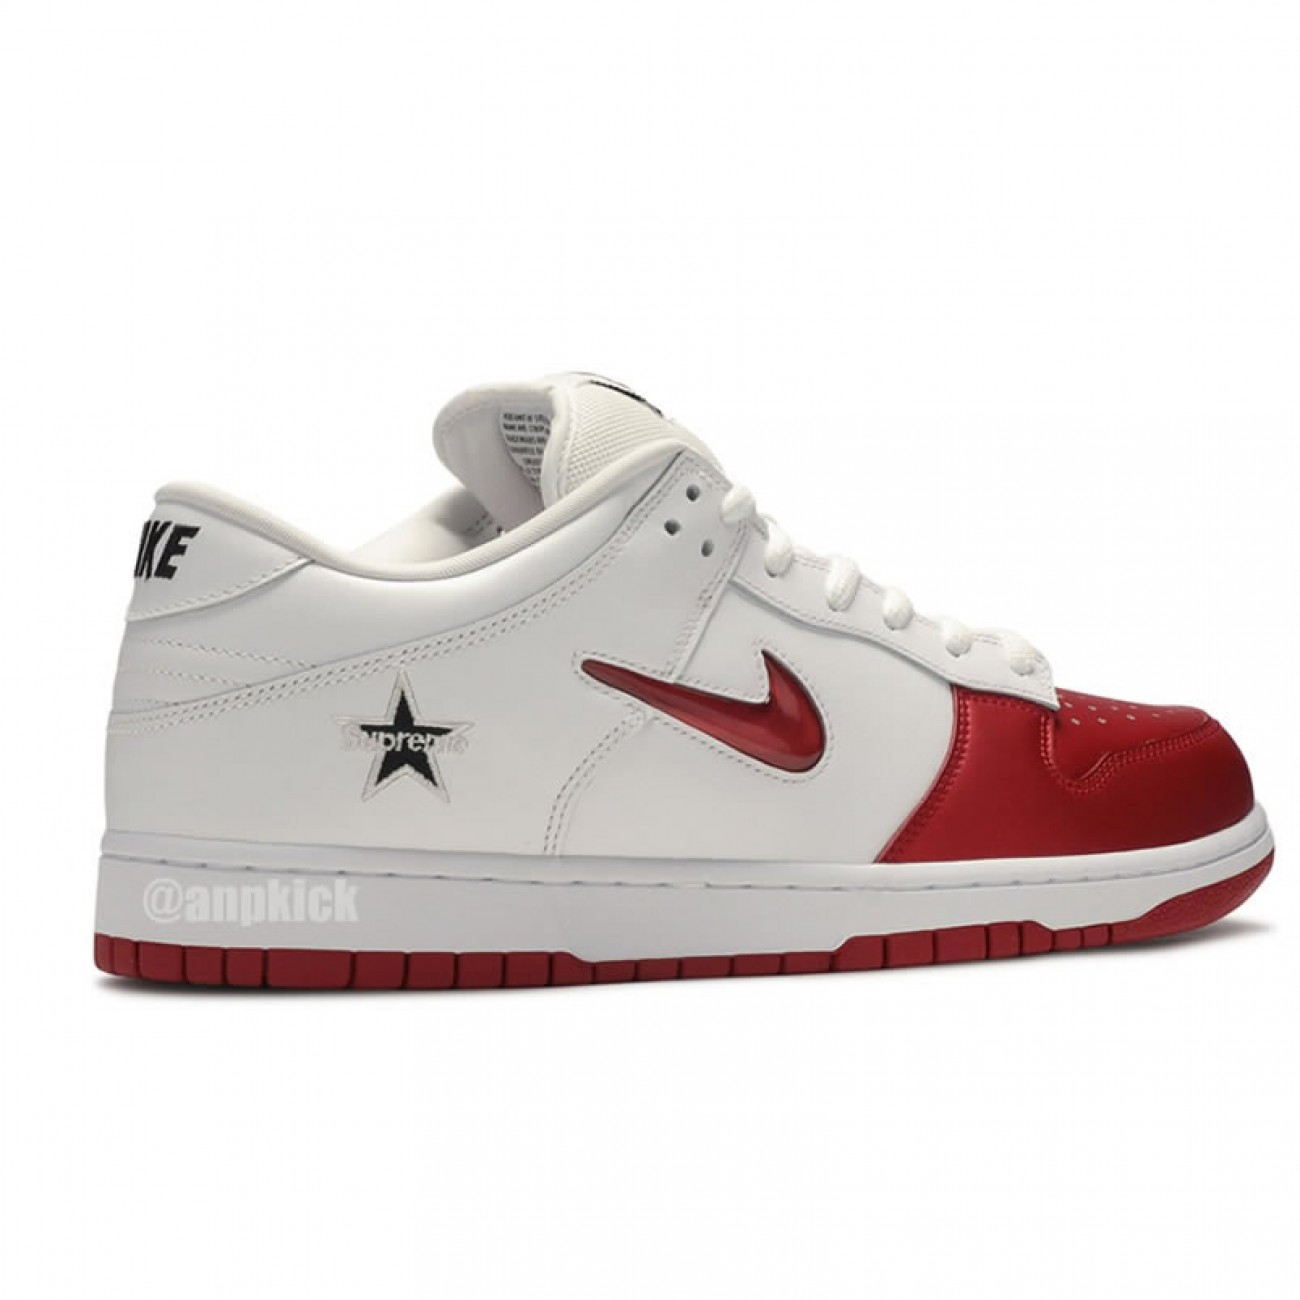 Supreme x Nike SB Dunk Low Red White 2019 Shoes CK3480-600